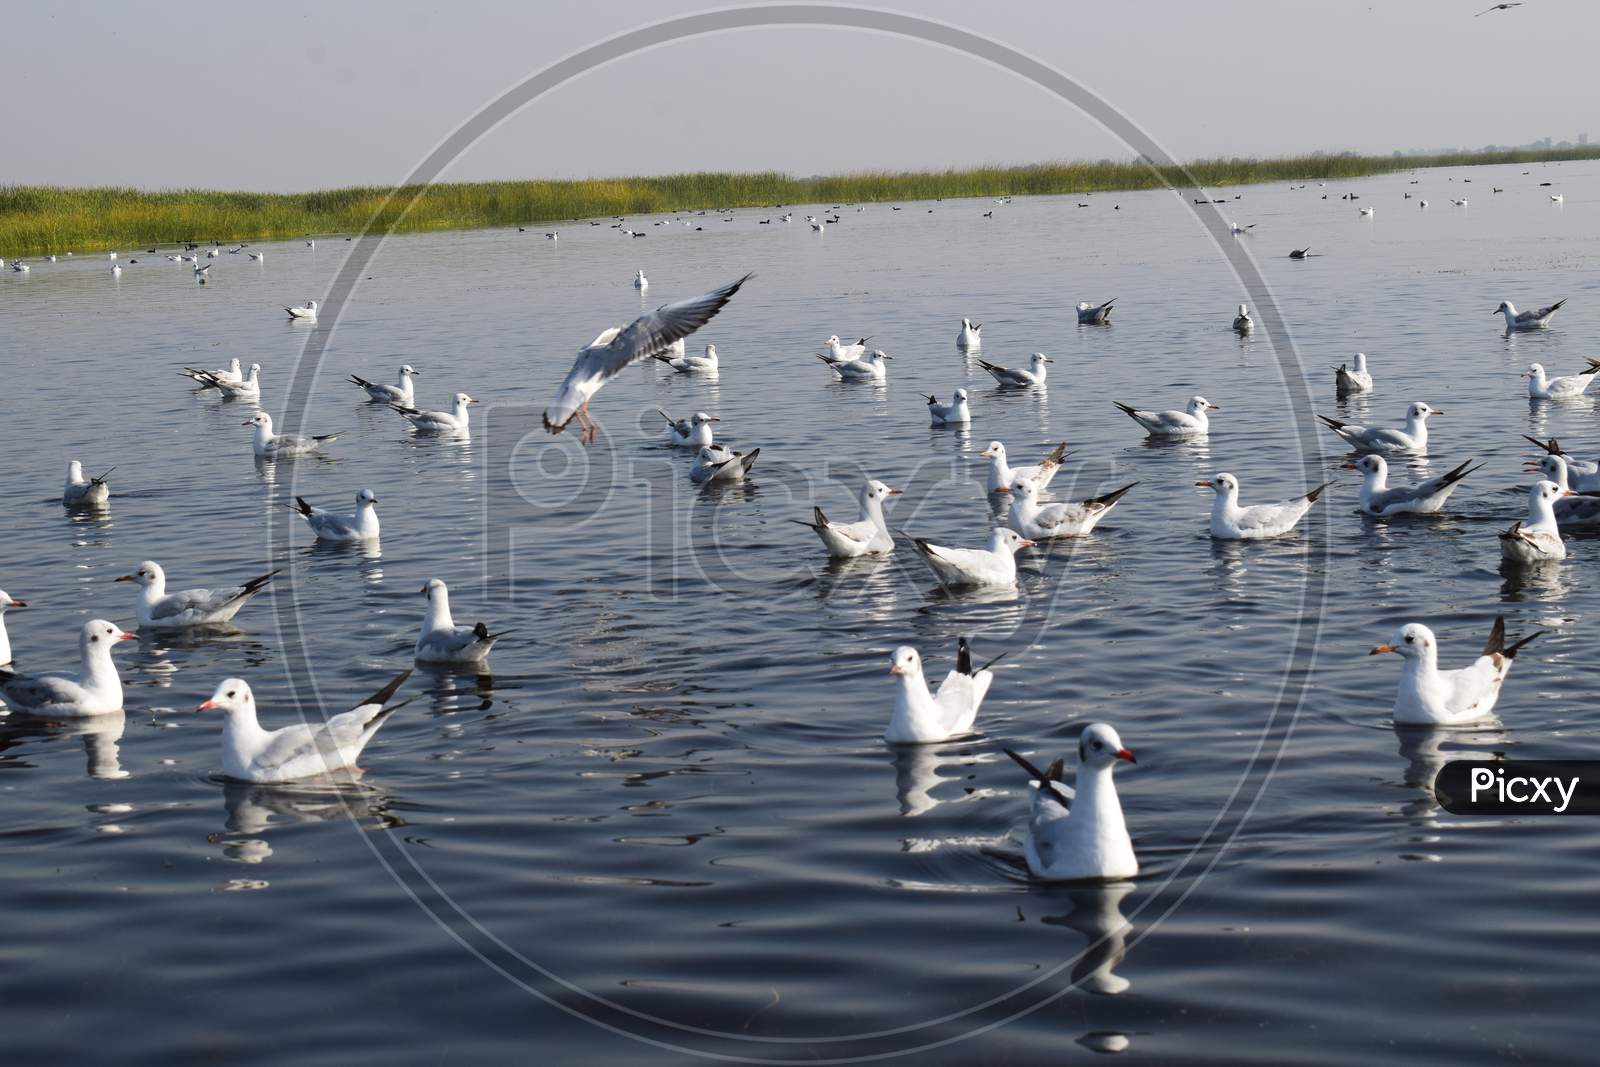 Flock Of Brown-Headed Seagulls Swimming In Peaceful Lake In India.